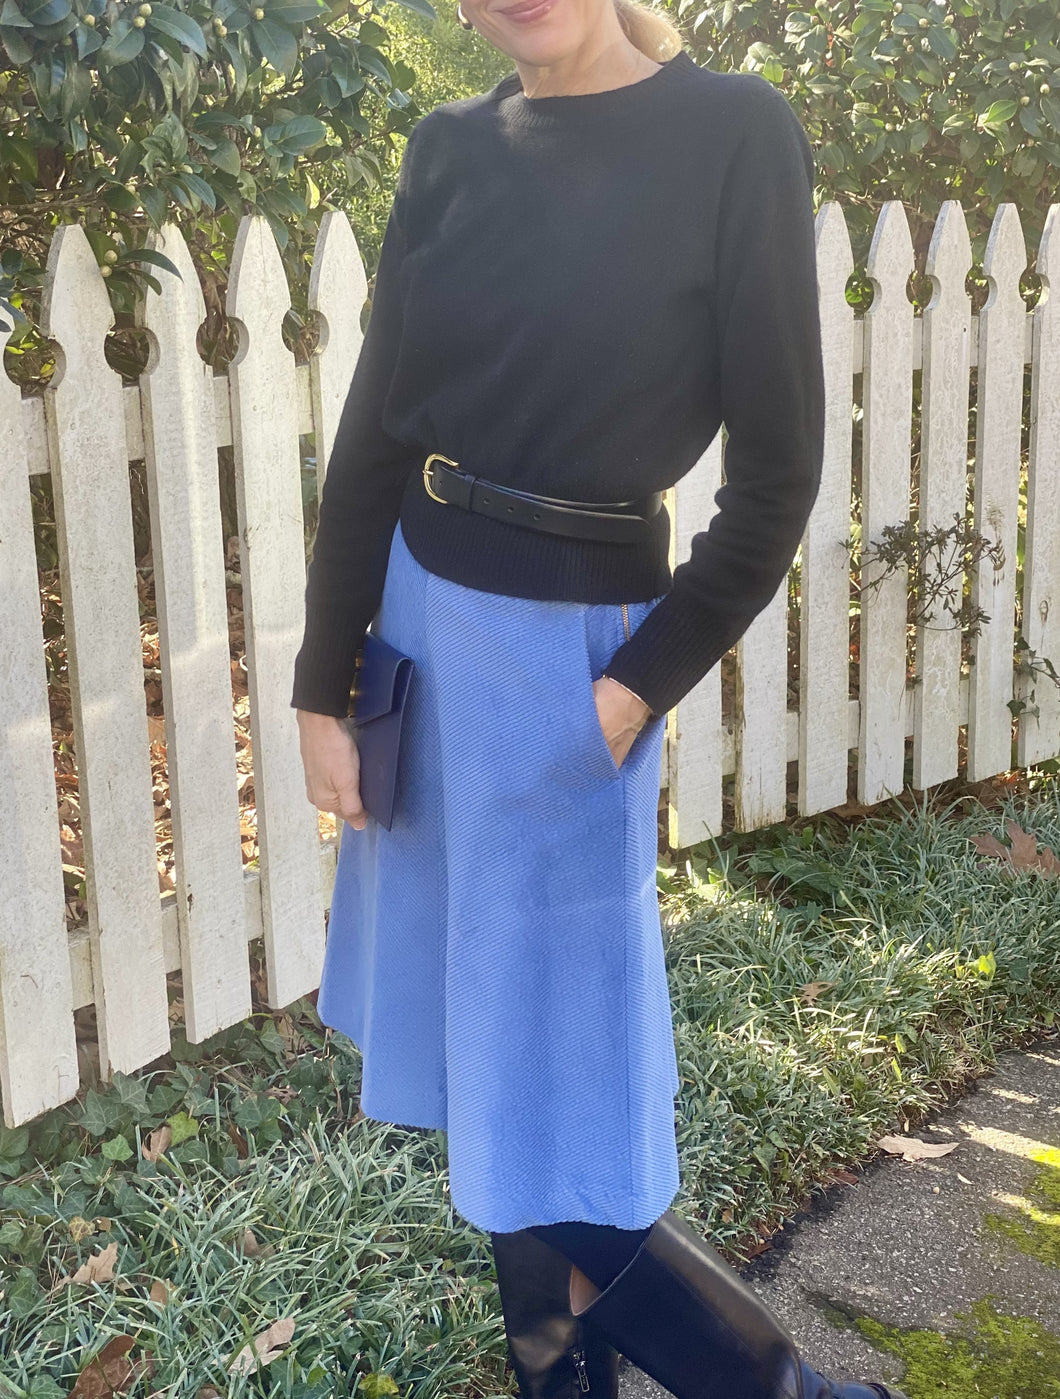 APOF Bello Skirt in Blue Corduroy